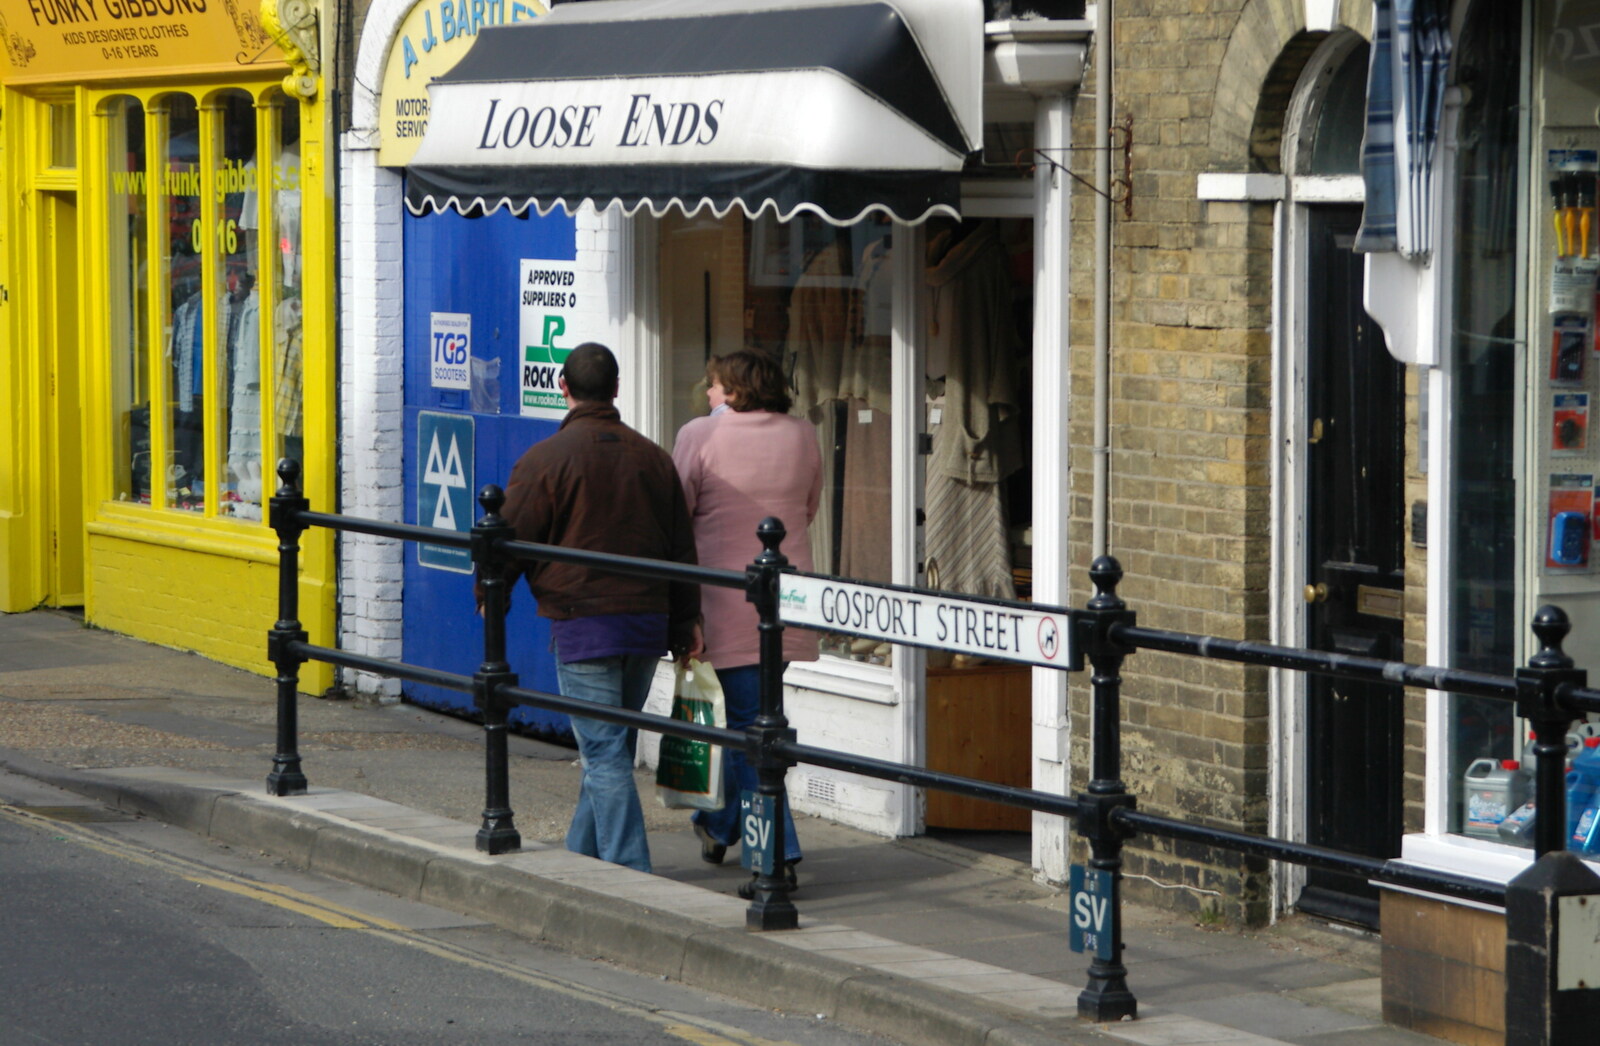 Sis and Matt stroll down Gosport Street from A Walk Around Lymington, and Luke Leaves Qualcomm Cambridge - 13th March 2005